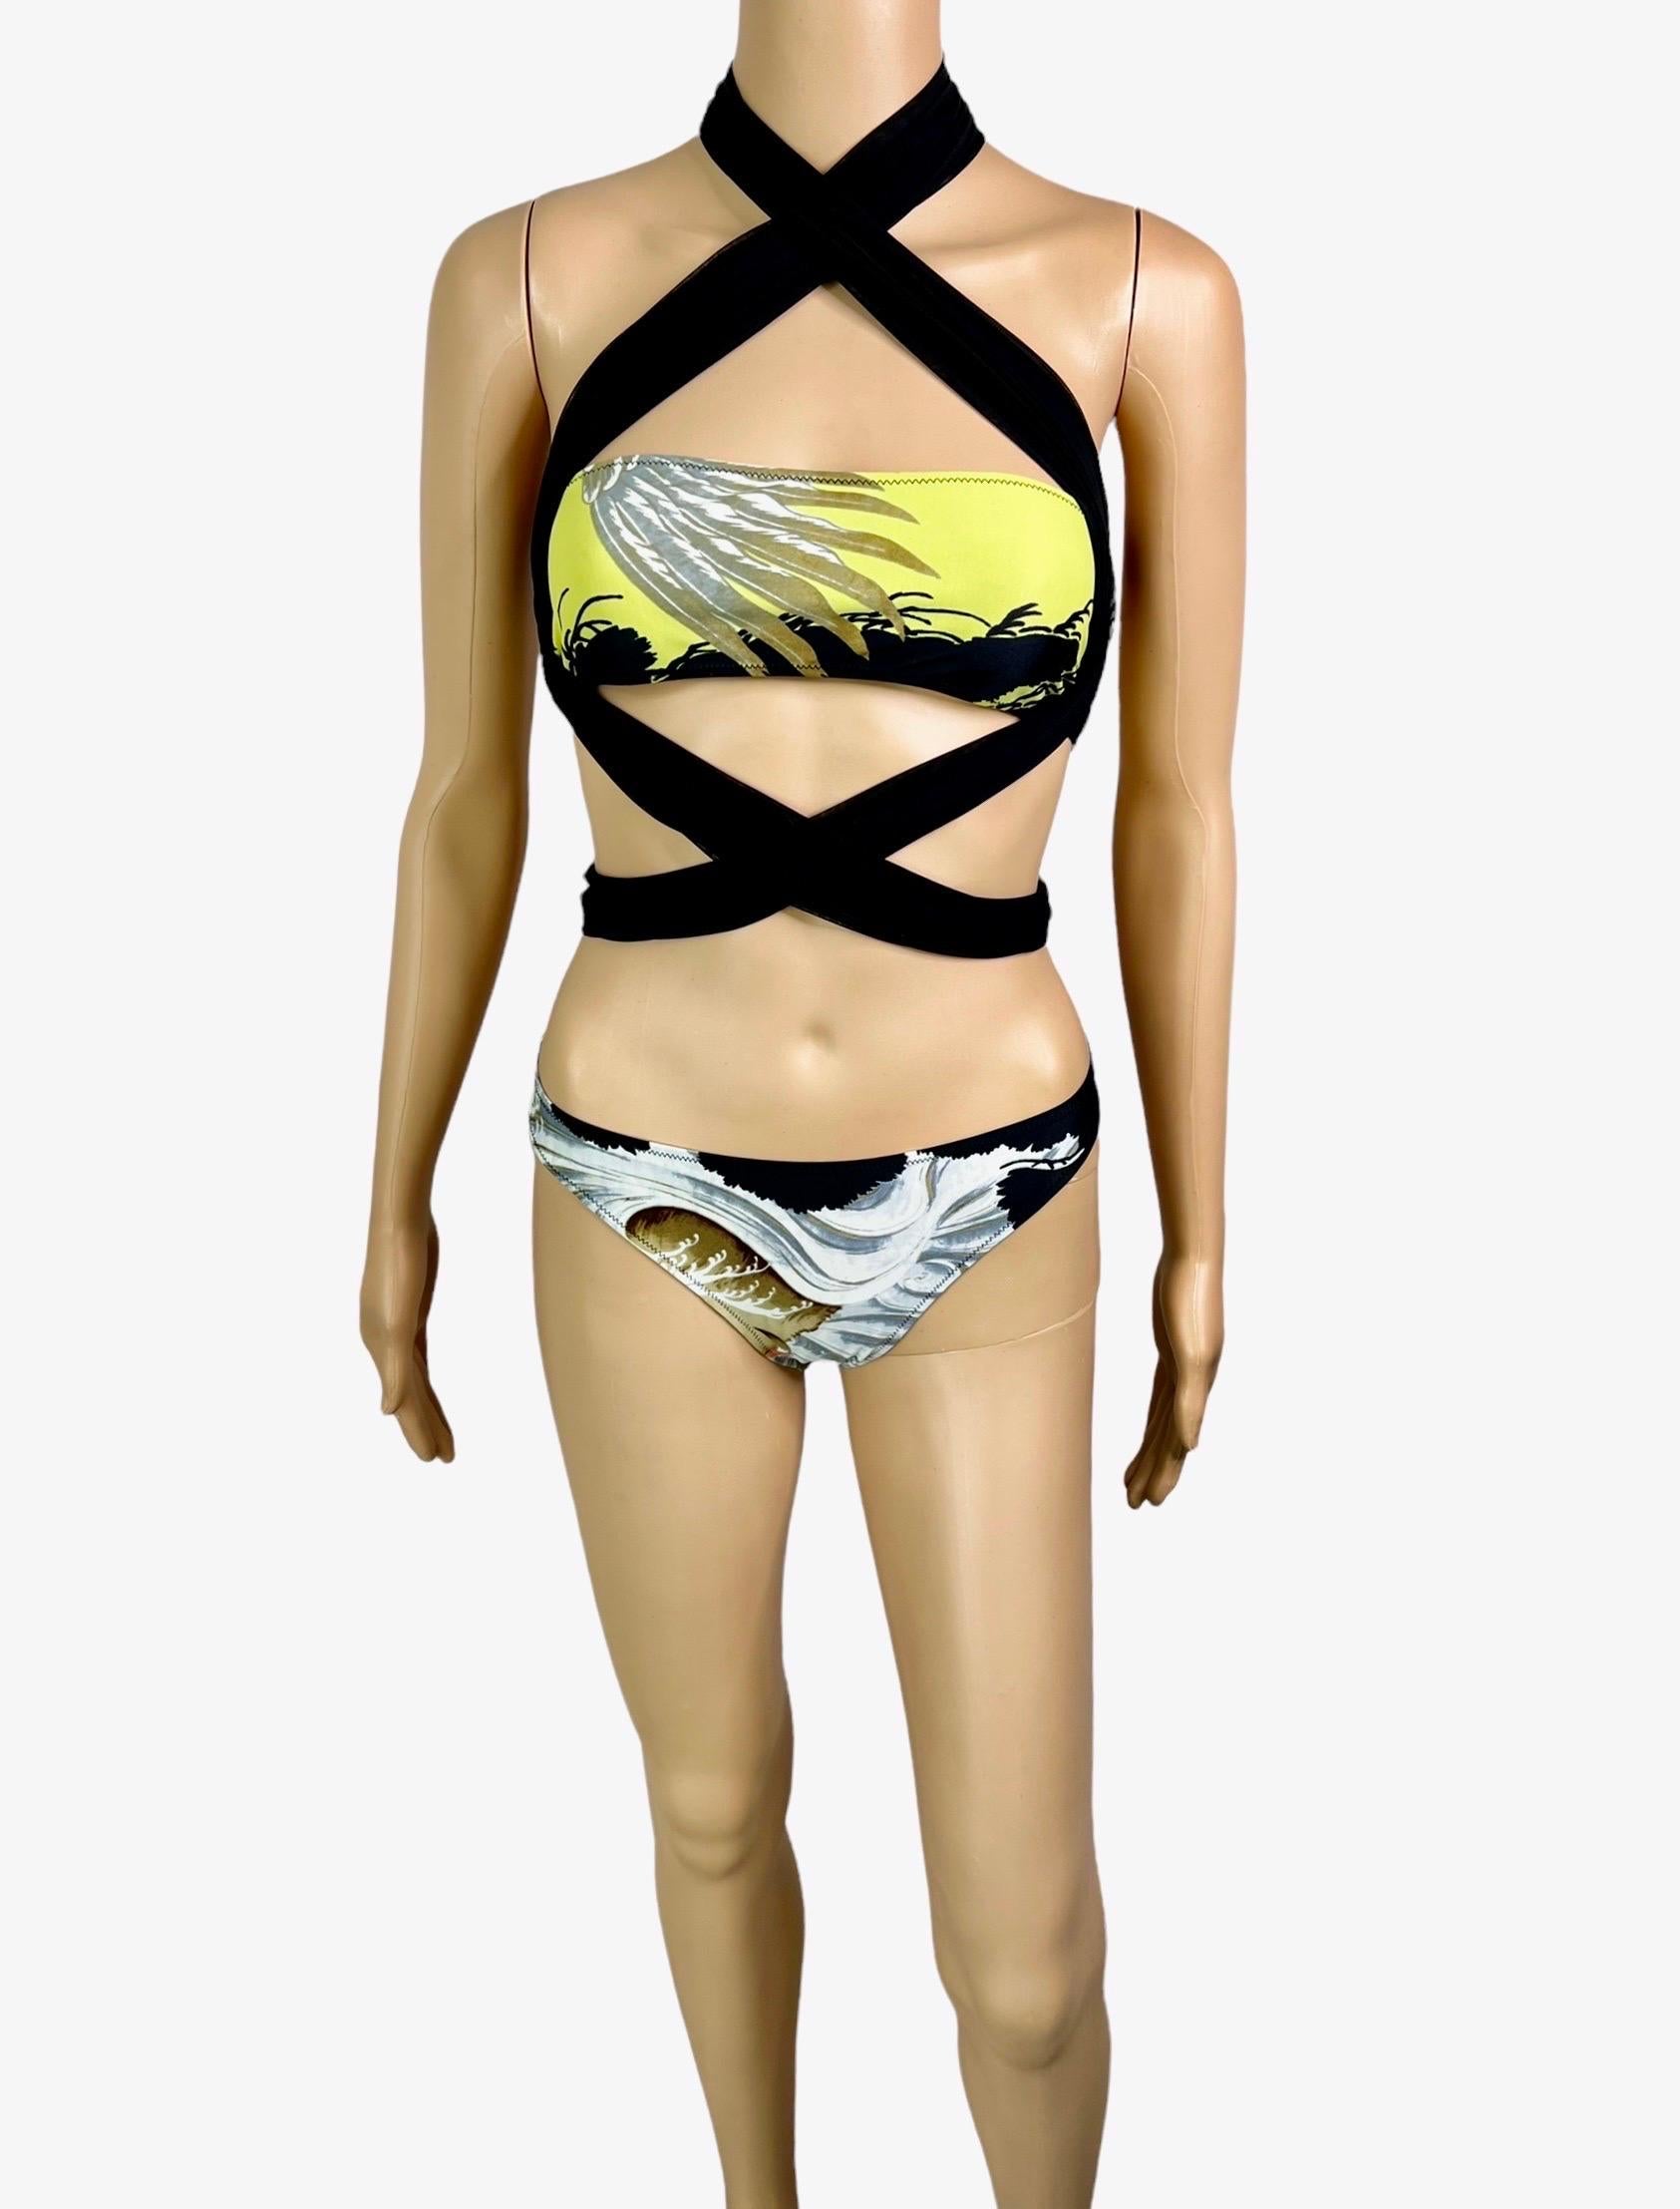 Jean Paul Gaultier Soleil Vintage Eagle Tattoo Print Bikini Swimwear Swimsuit 2 Piece Set Size M

Excellent Condition. Like New.


